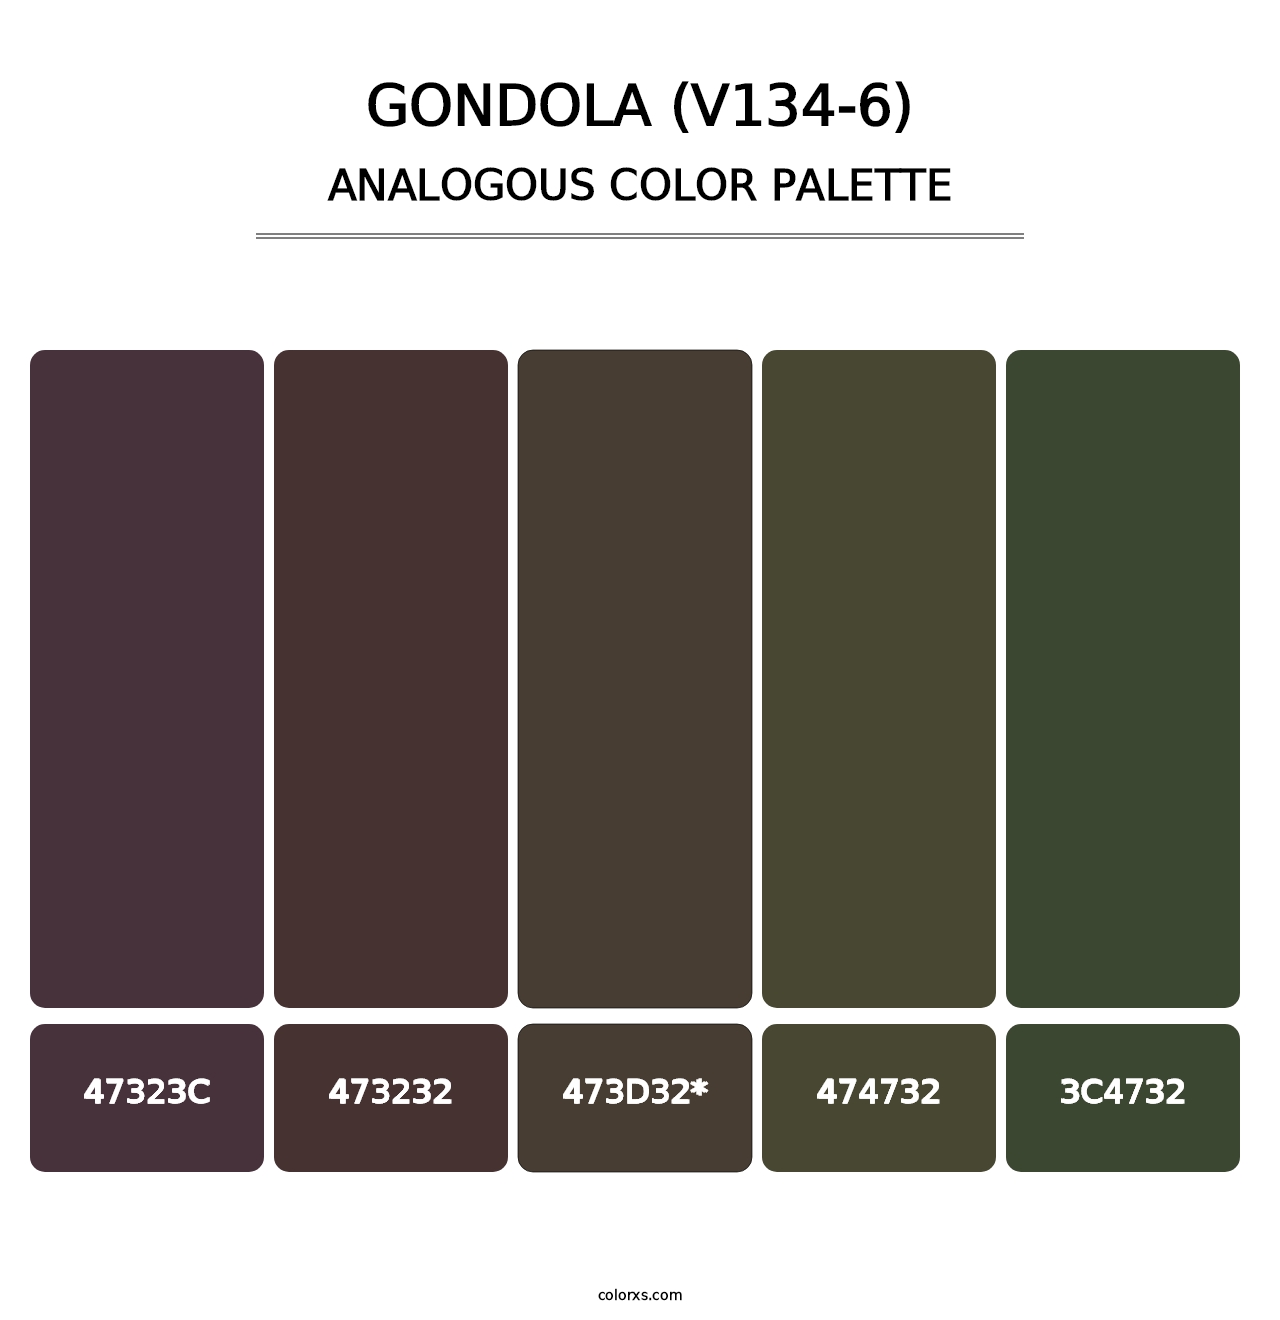 Gondola (V134-6) - Analogous Color Palette